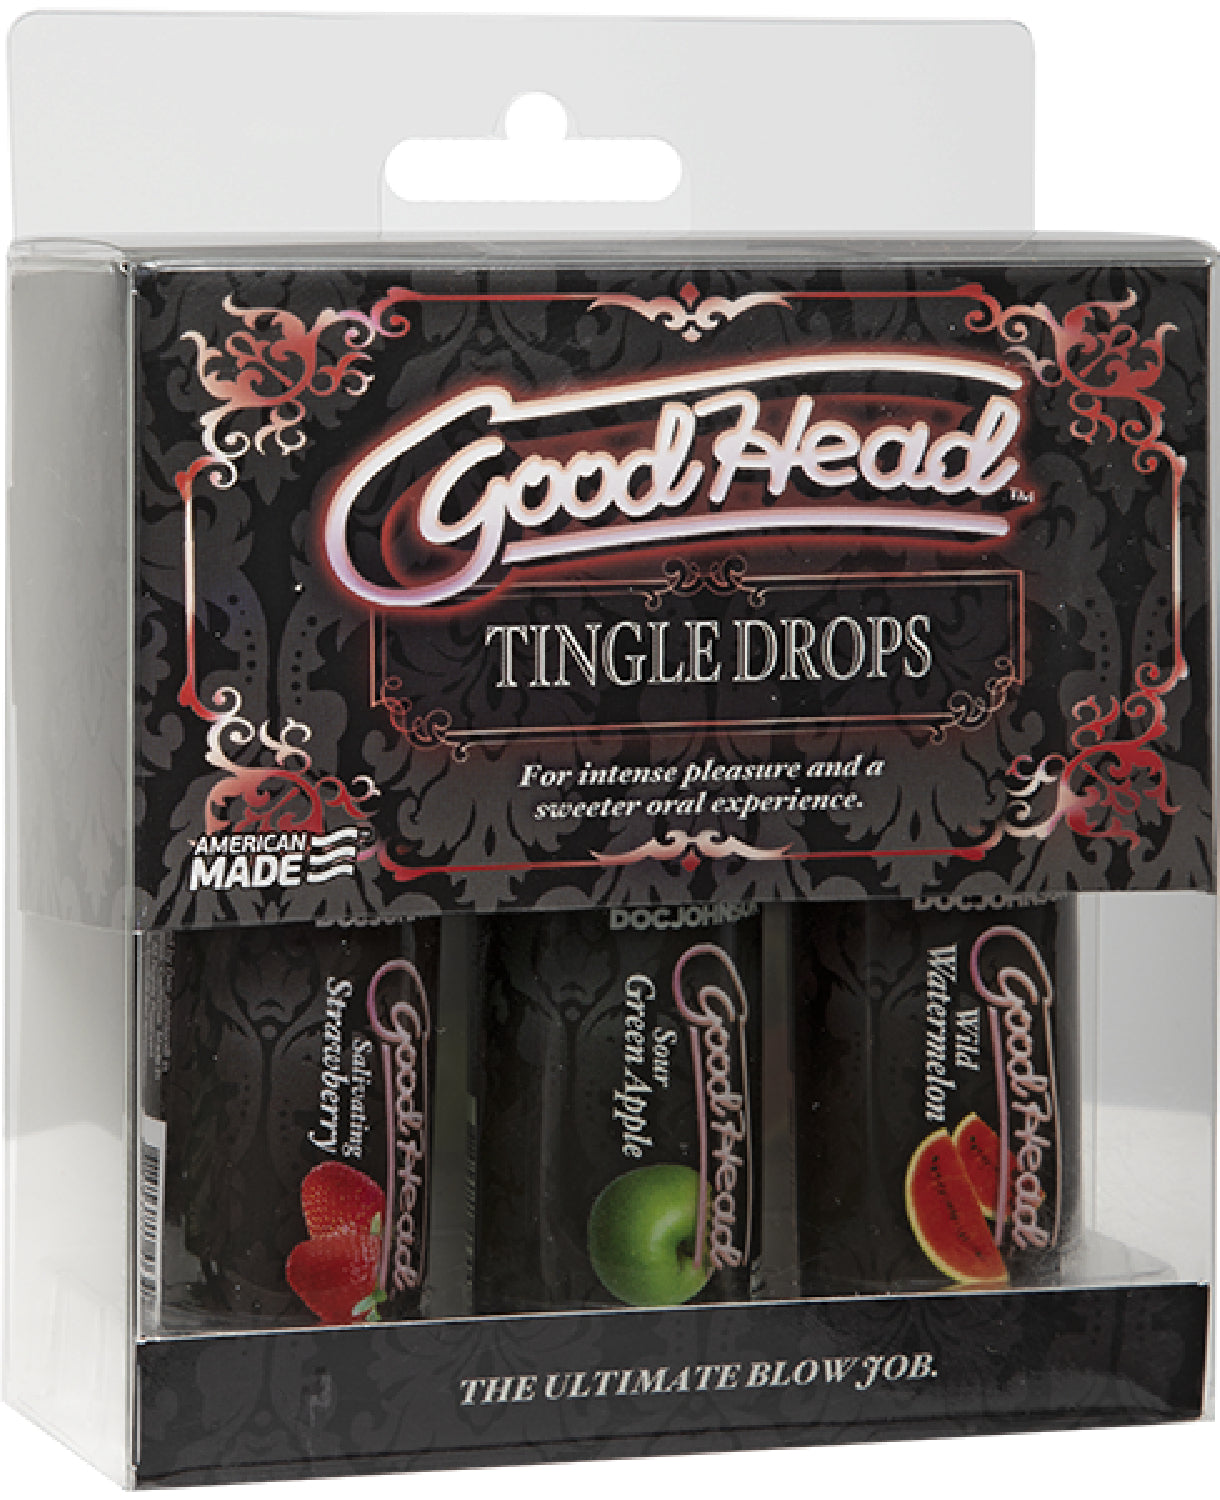 Goodhead - Tingle Drops - 3-Pack